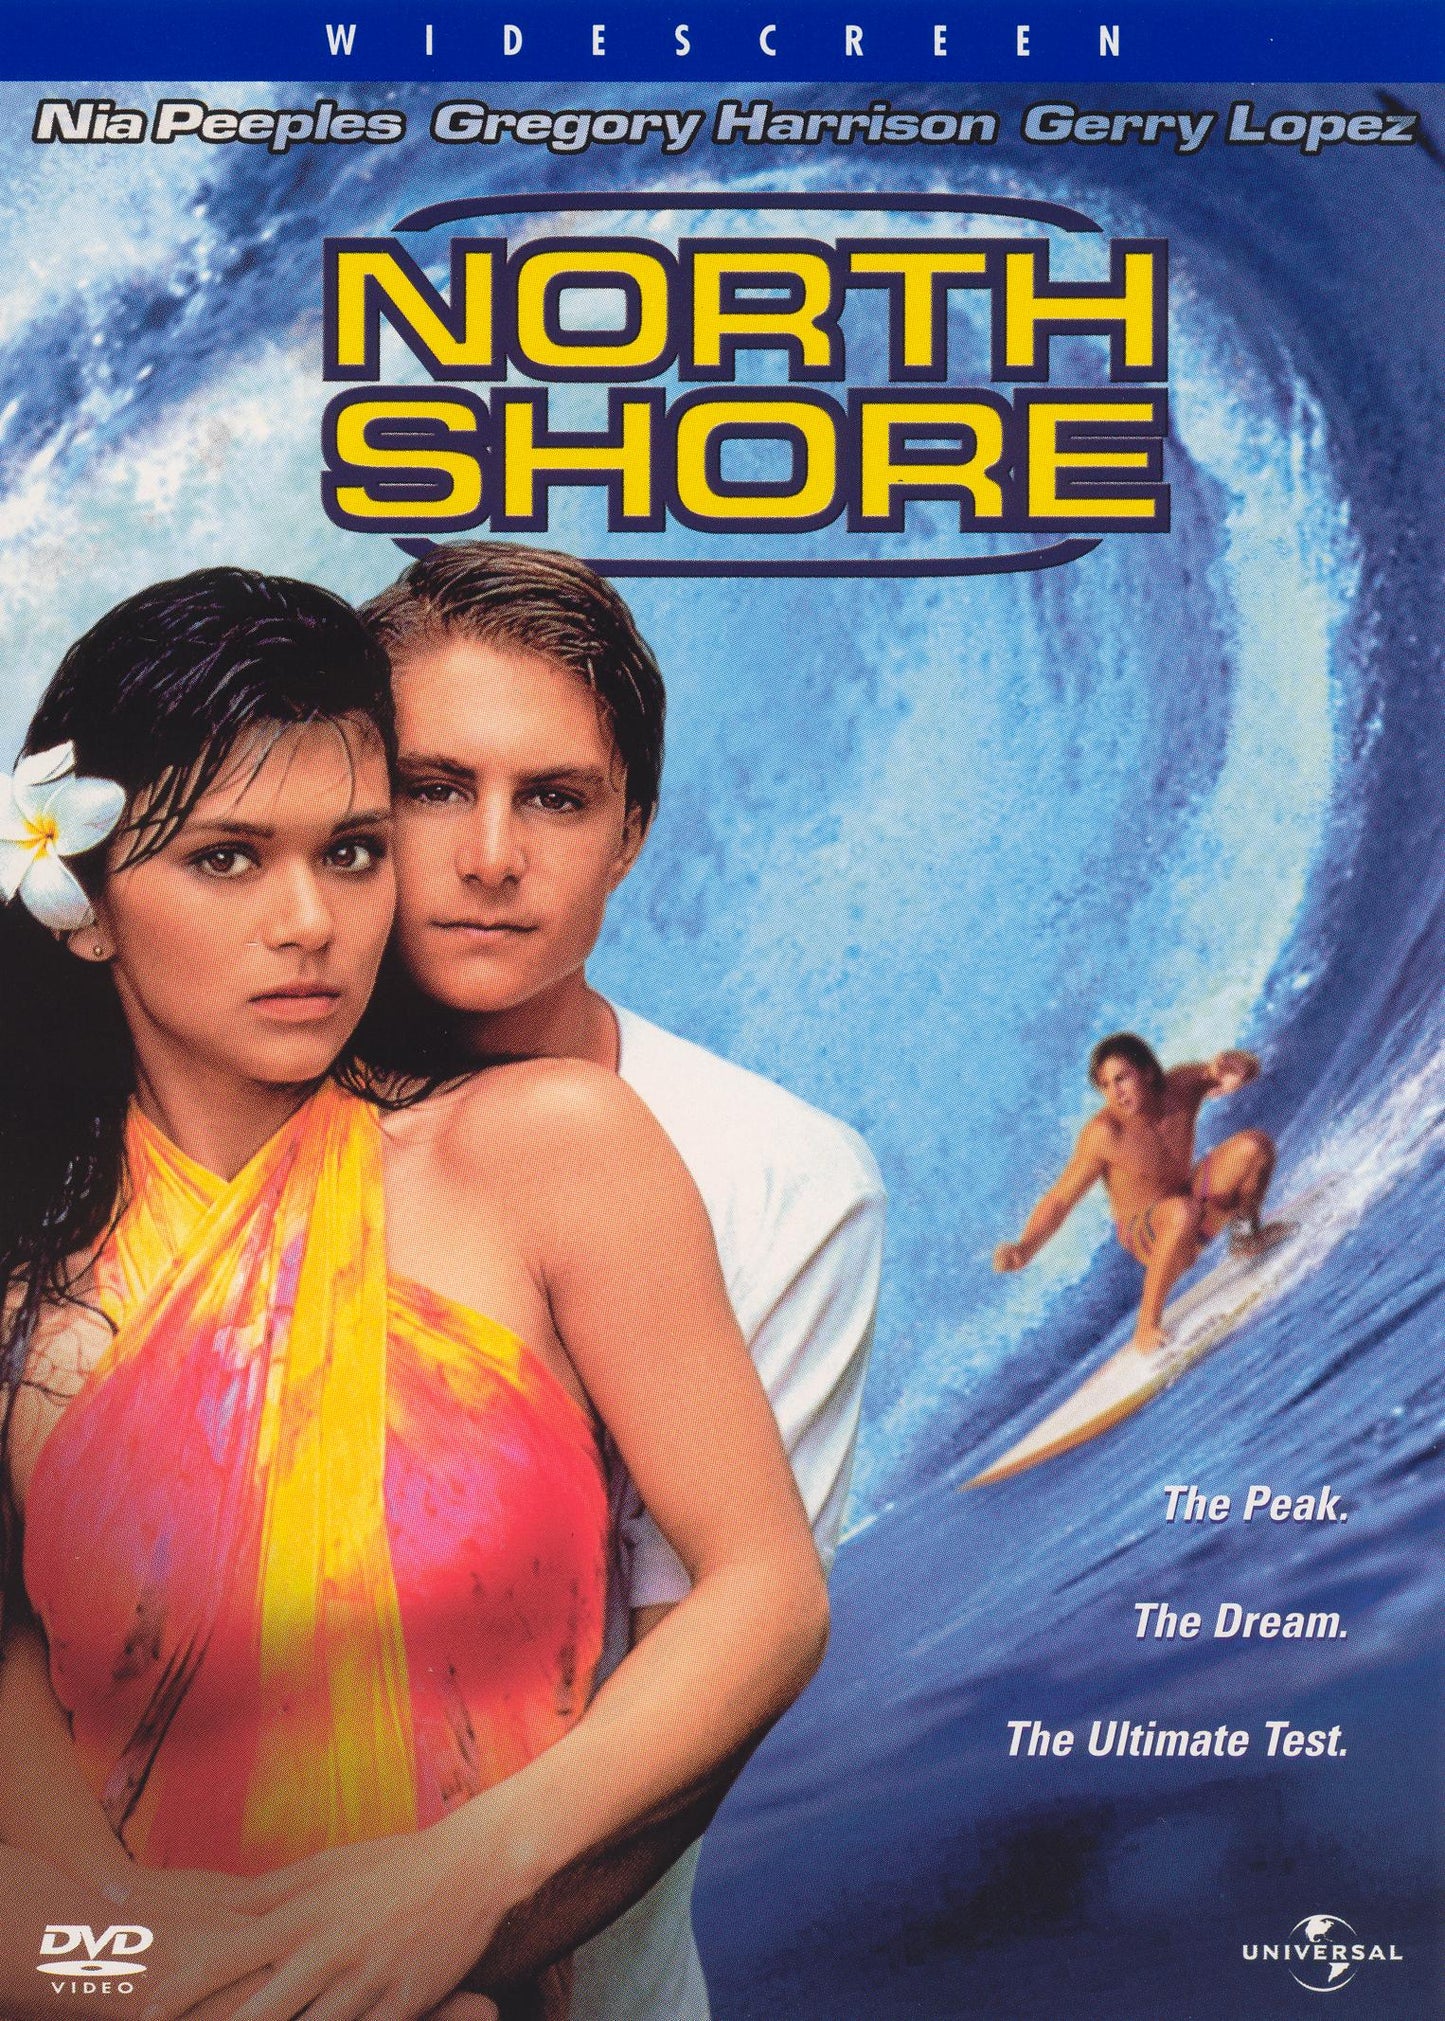 North Shore cover art